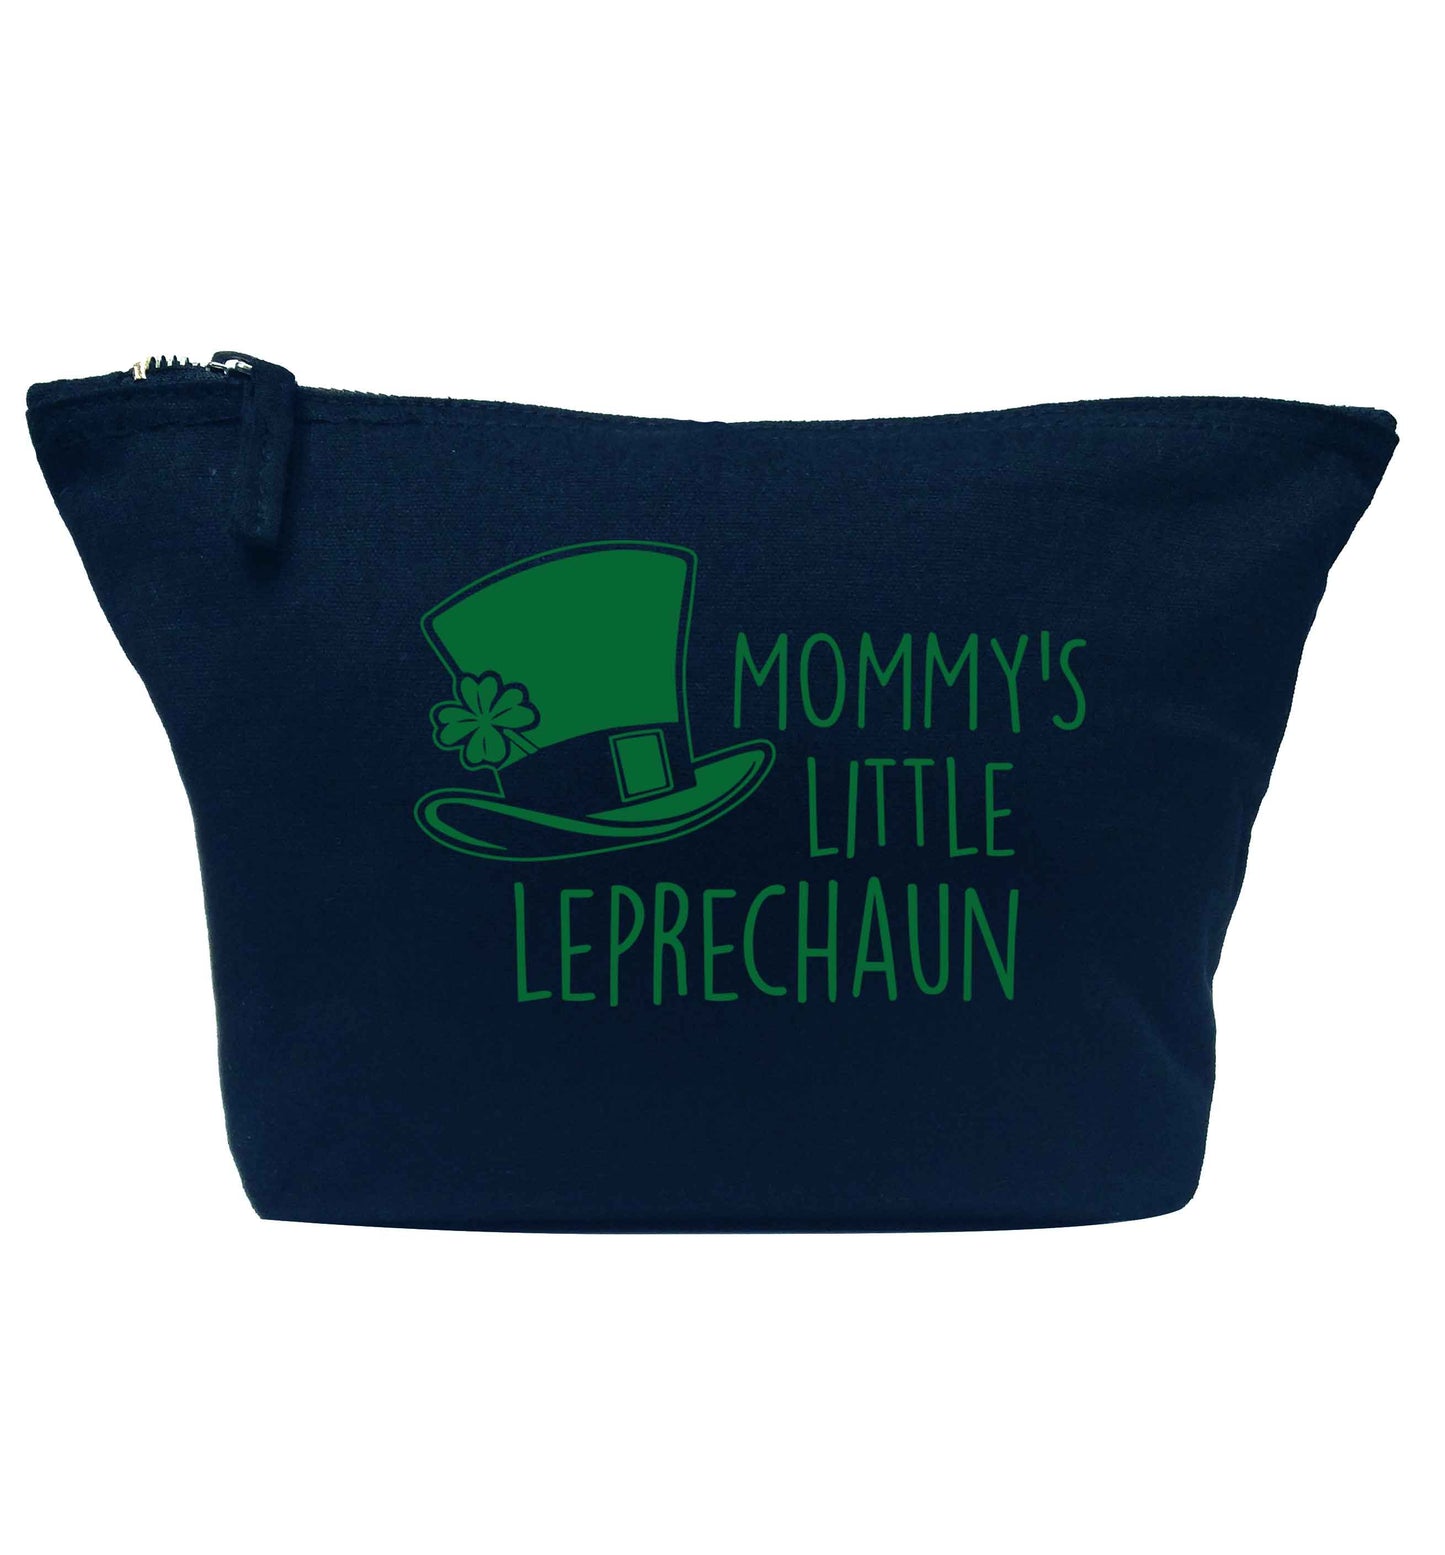 Mommy's little leprechaun navy makeup bag